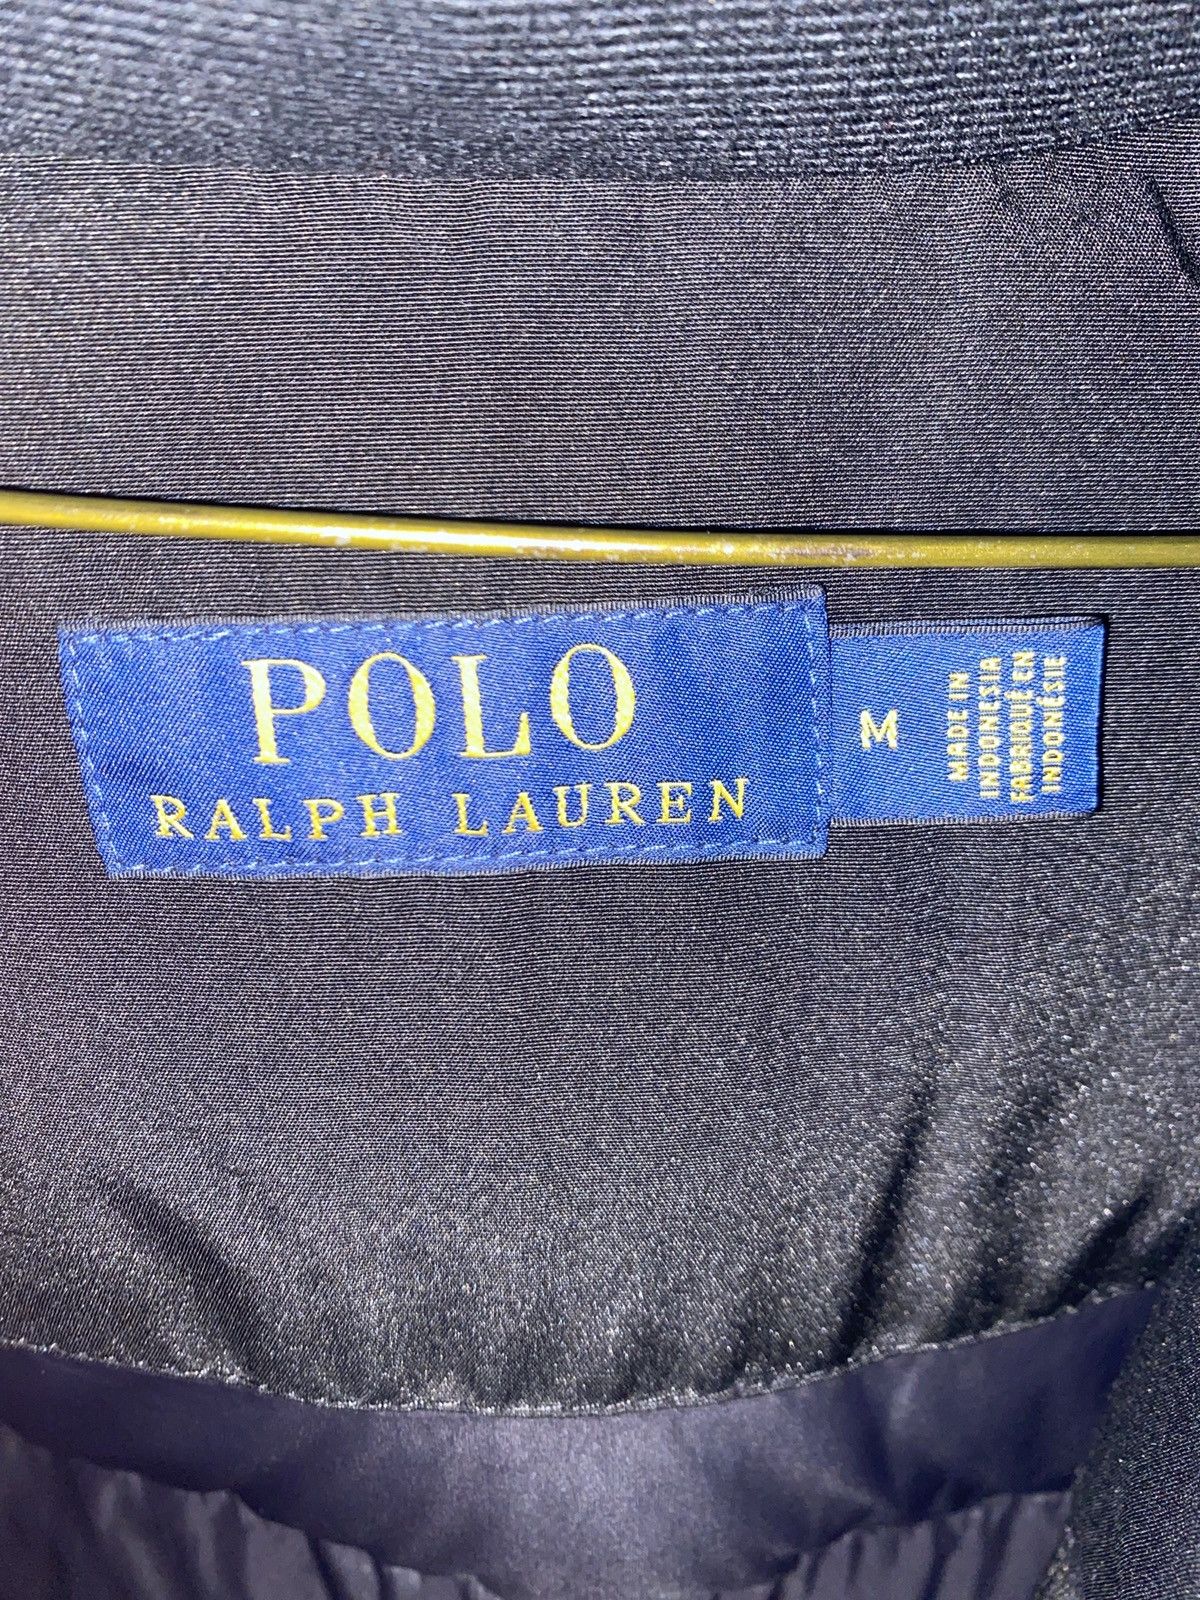 Polo Ralph Lauren Polo Ralph Lauren Parka Size US M / EU 48-50 / 2 - 3 Thumbnail